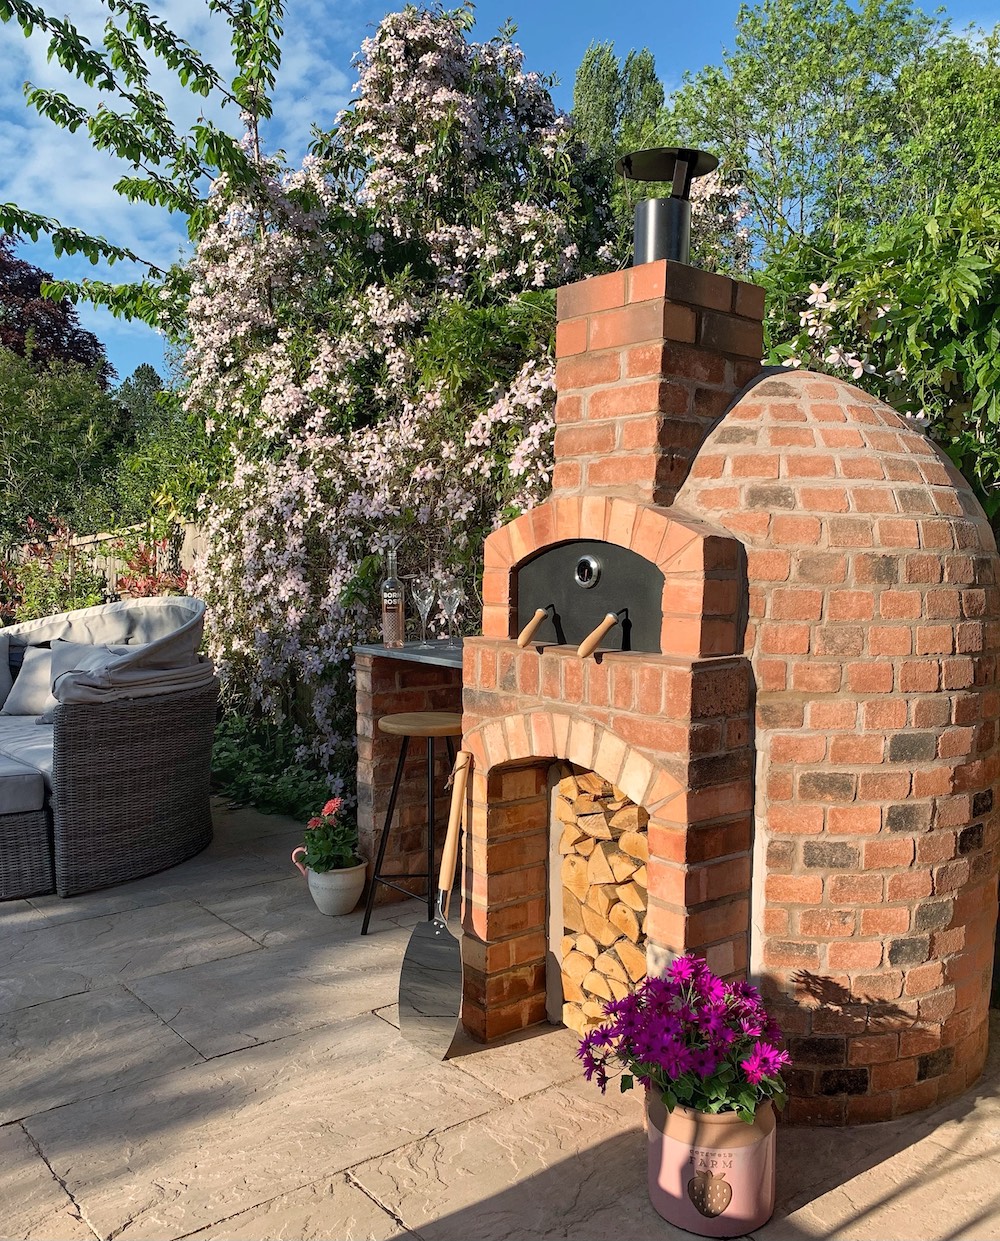 Brick pizza oven in backyard